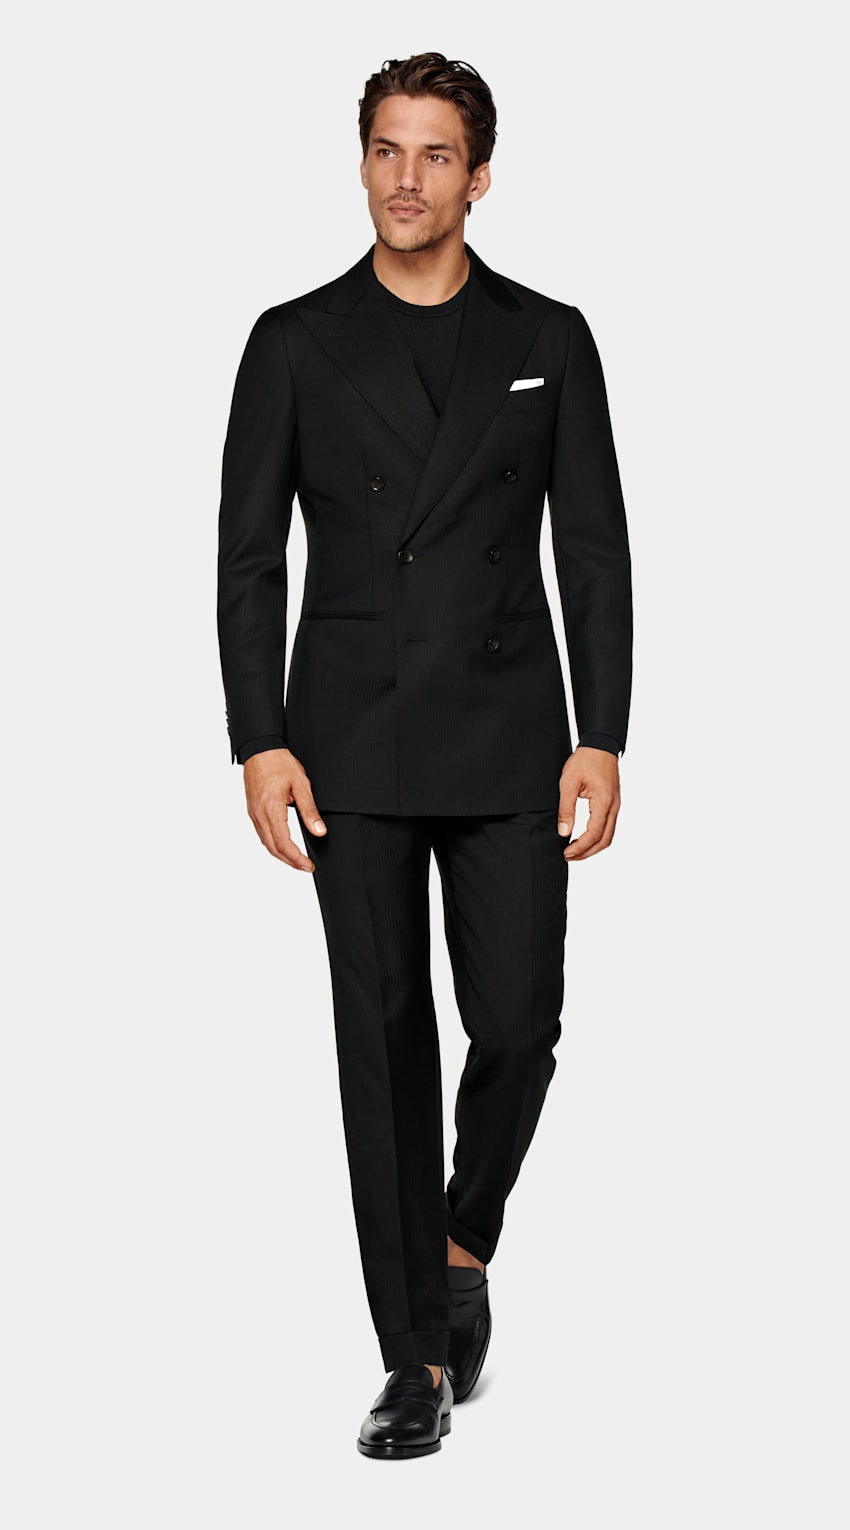 SUITSUPPLY Pure S130's Wool by Vitale Barberis Canonico, Italy Black Herringbone Havana Suit